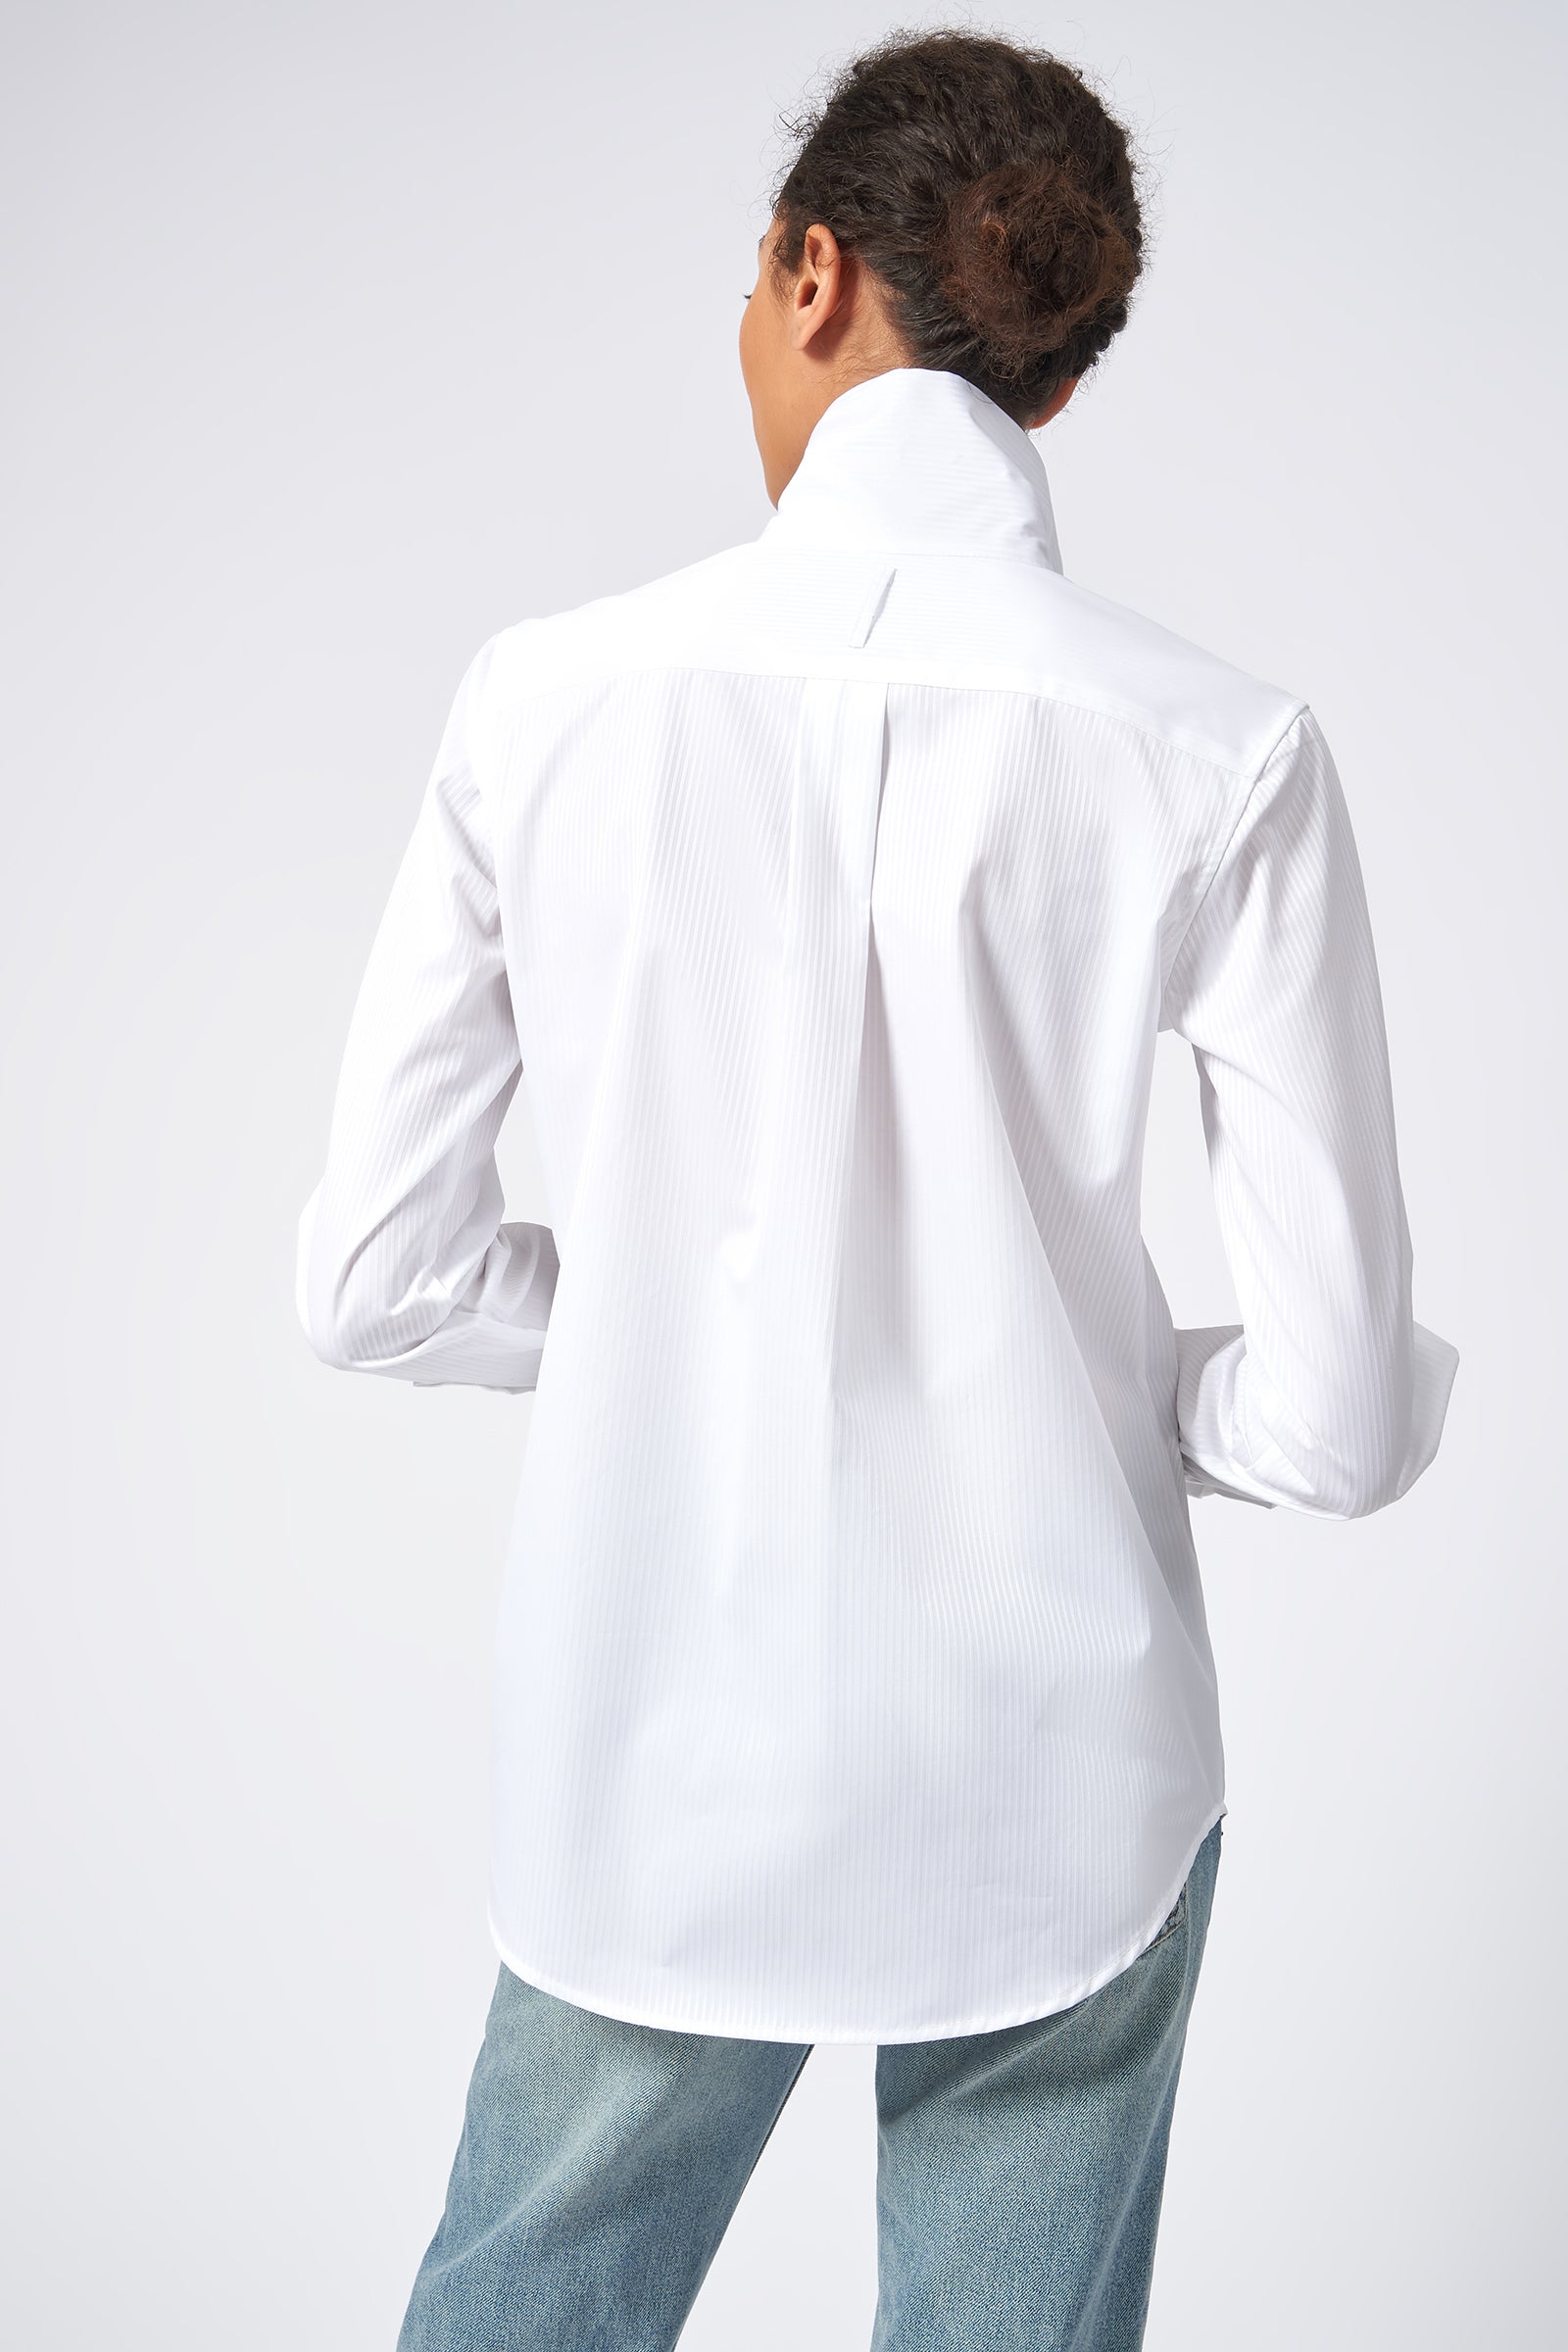 Kal Rieman Box Pleat Ginna Tailored Shirt in White Satin Stripe on Model Side Detail View